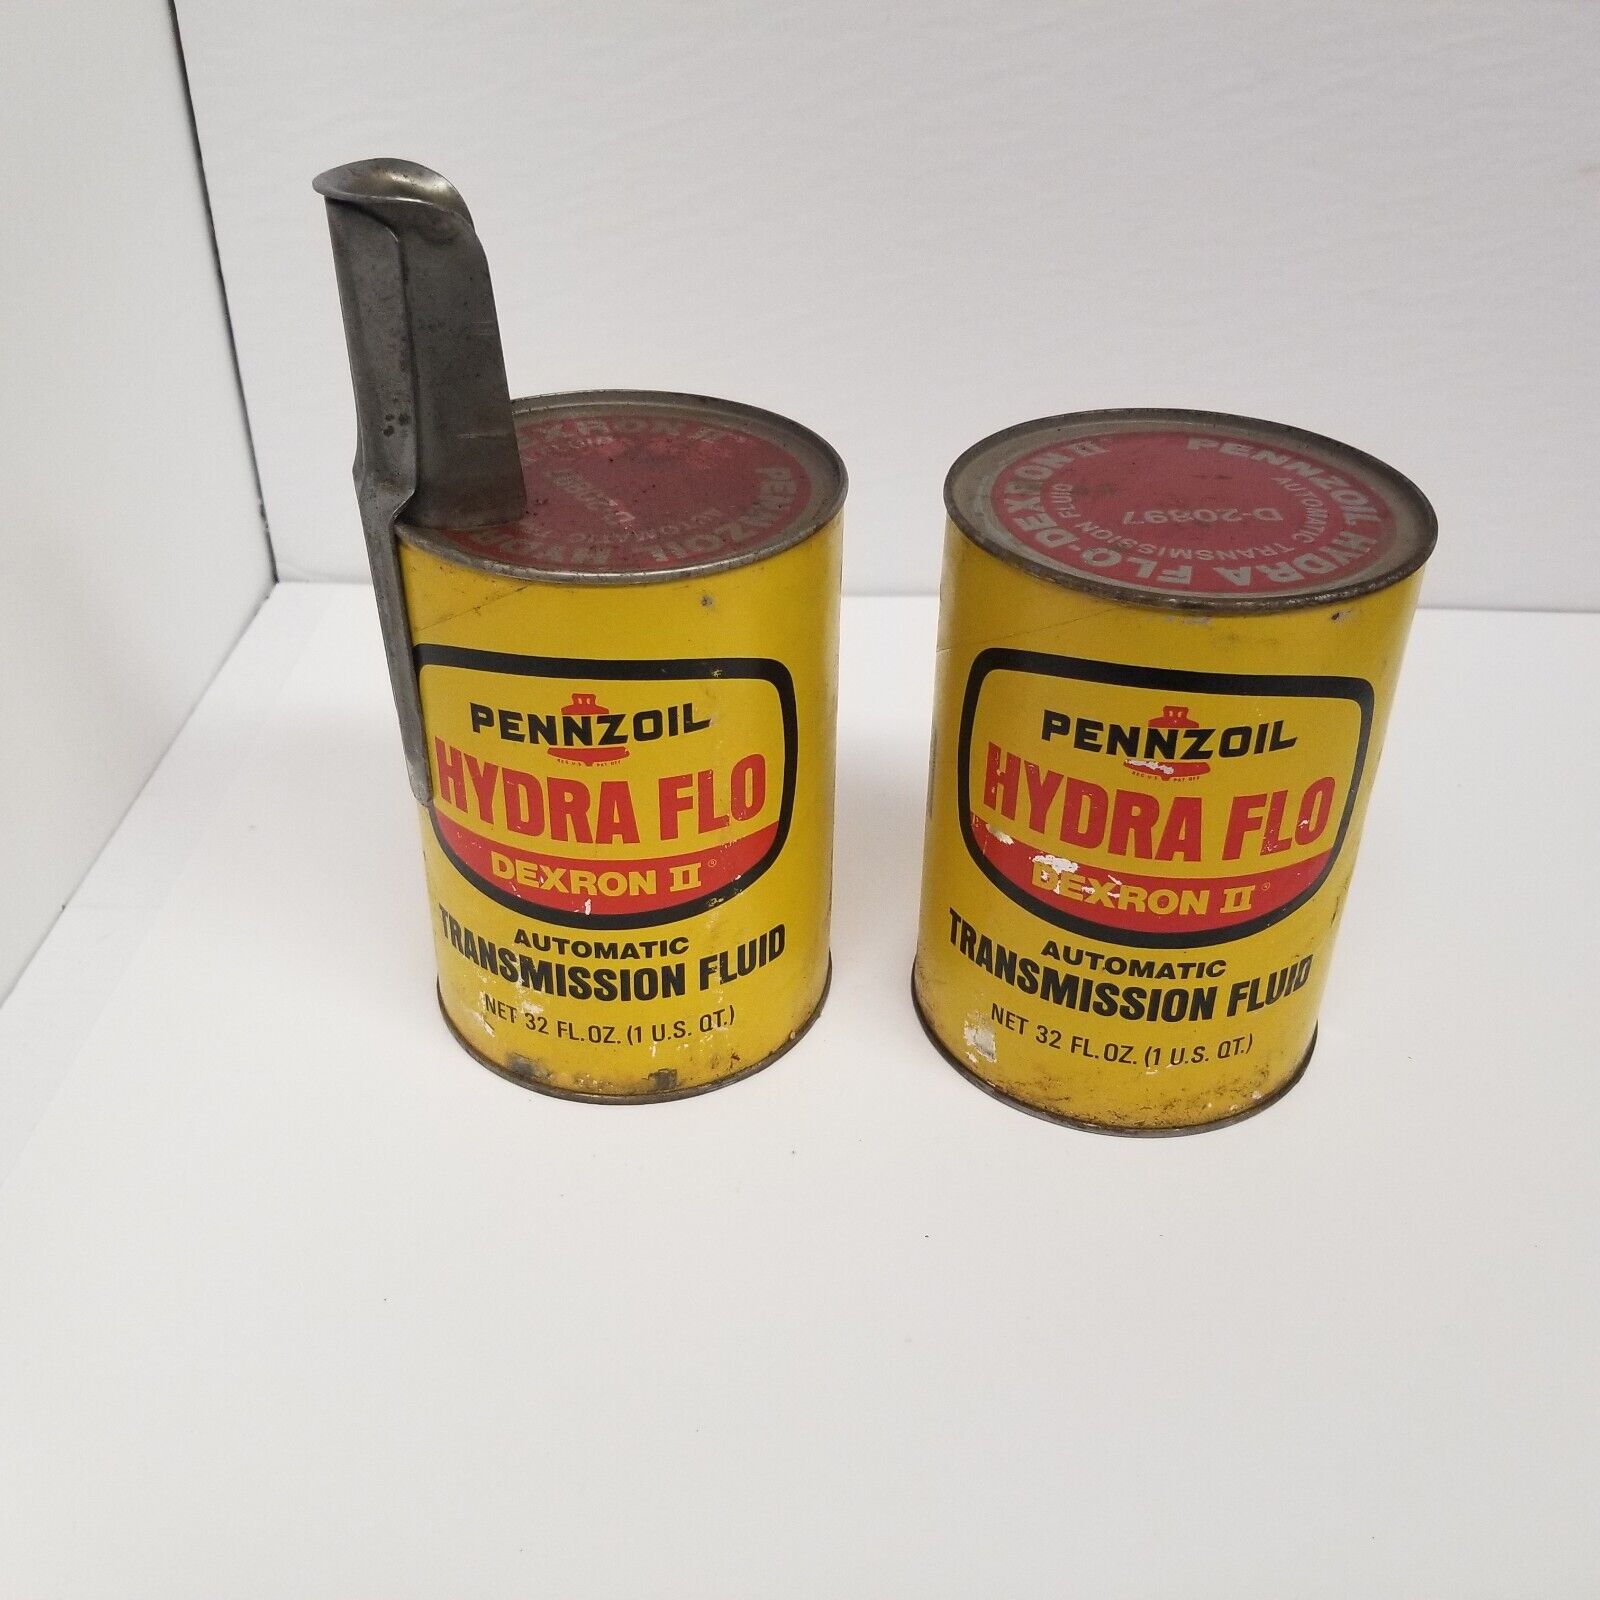 Vintage Pennzoil Hydra Flo Automatic Transmission Fluid 32 Oz. Full & Empty Cans